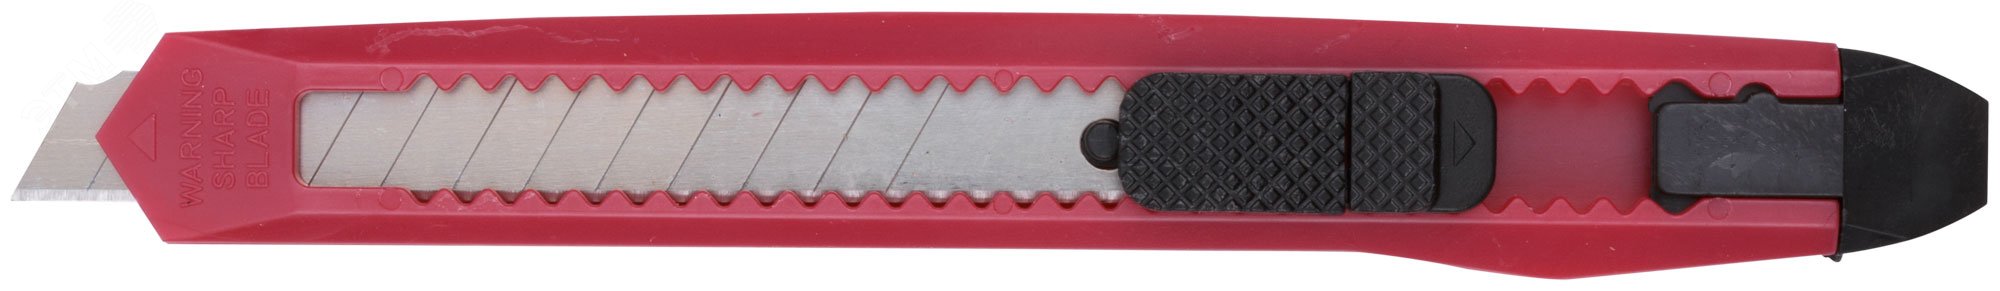 Нож технический ''Лайт'' 9 мм 10161 КУРС - превью